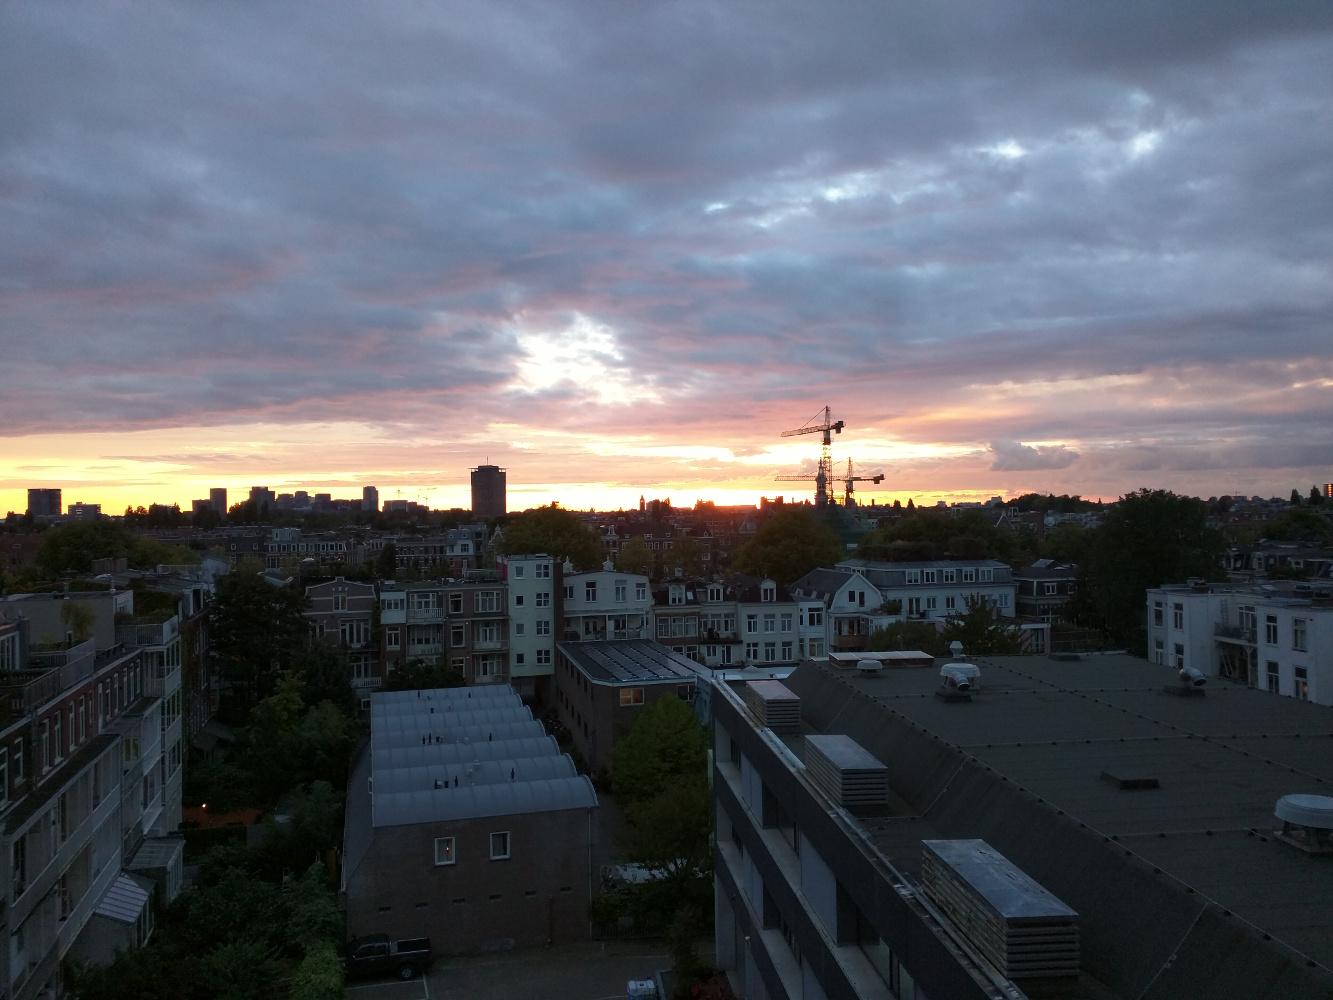 Sunset over Amsterdam